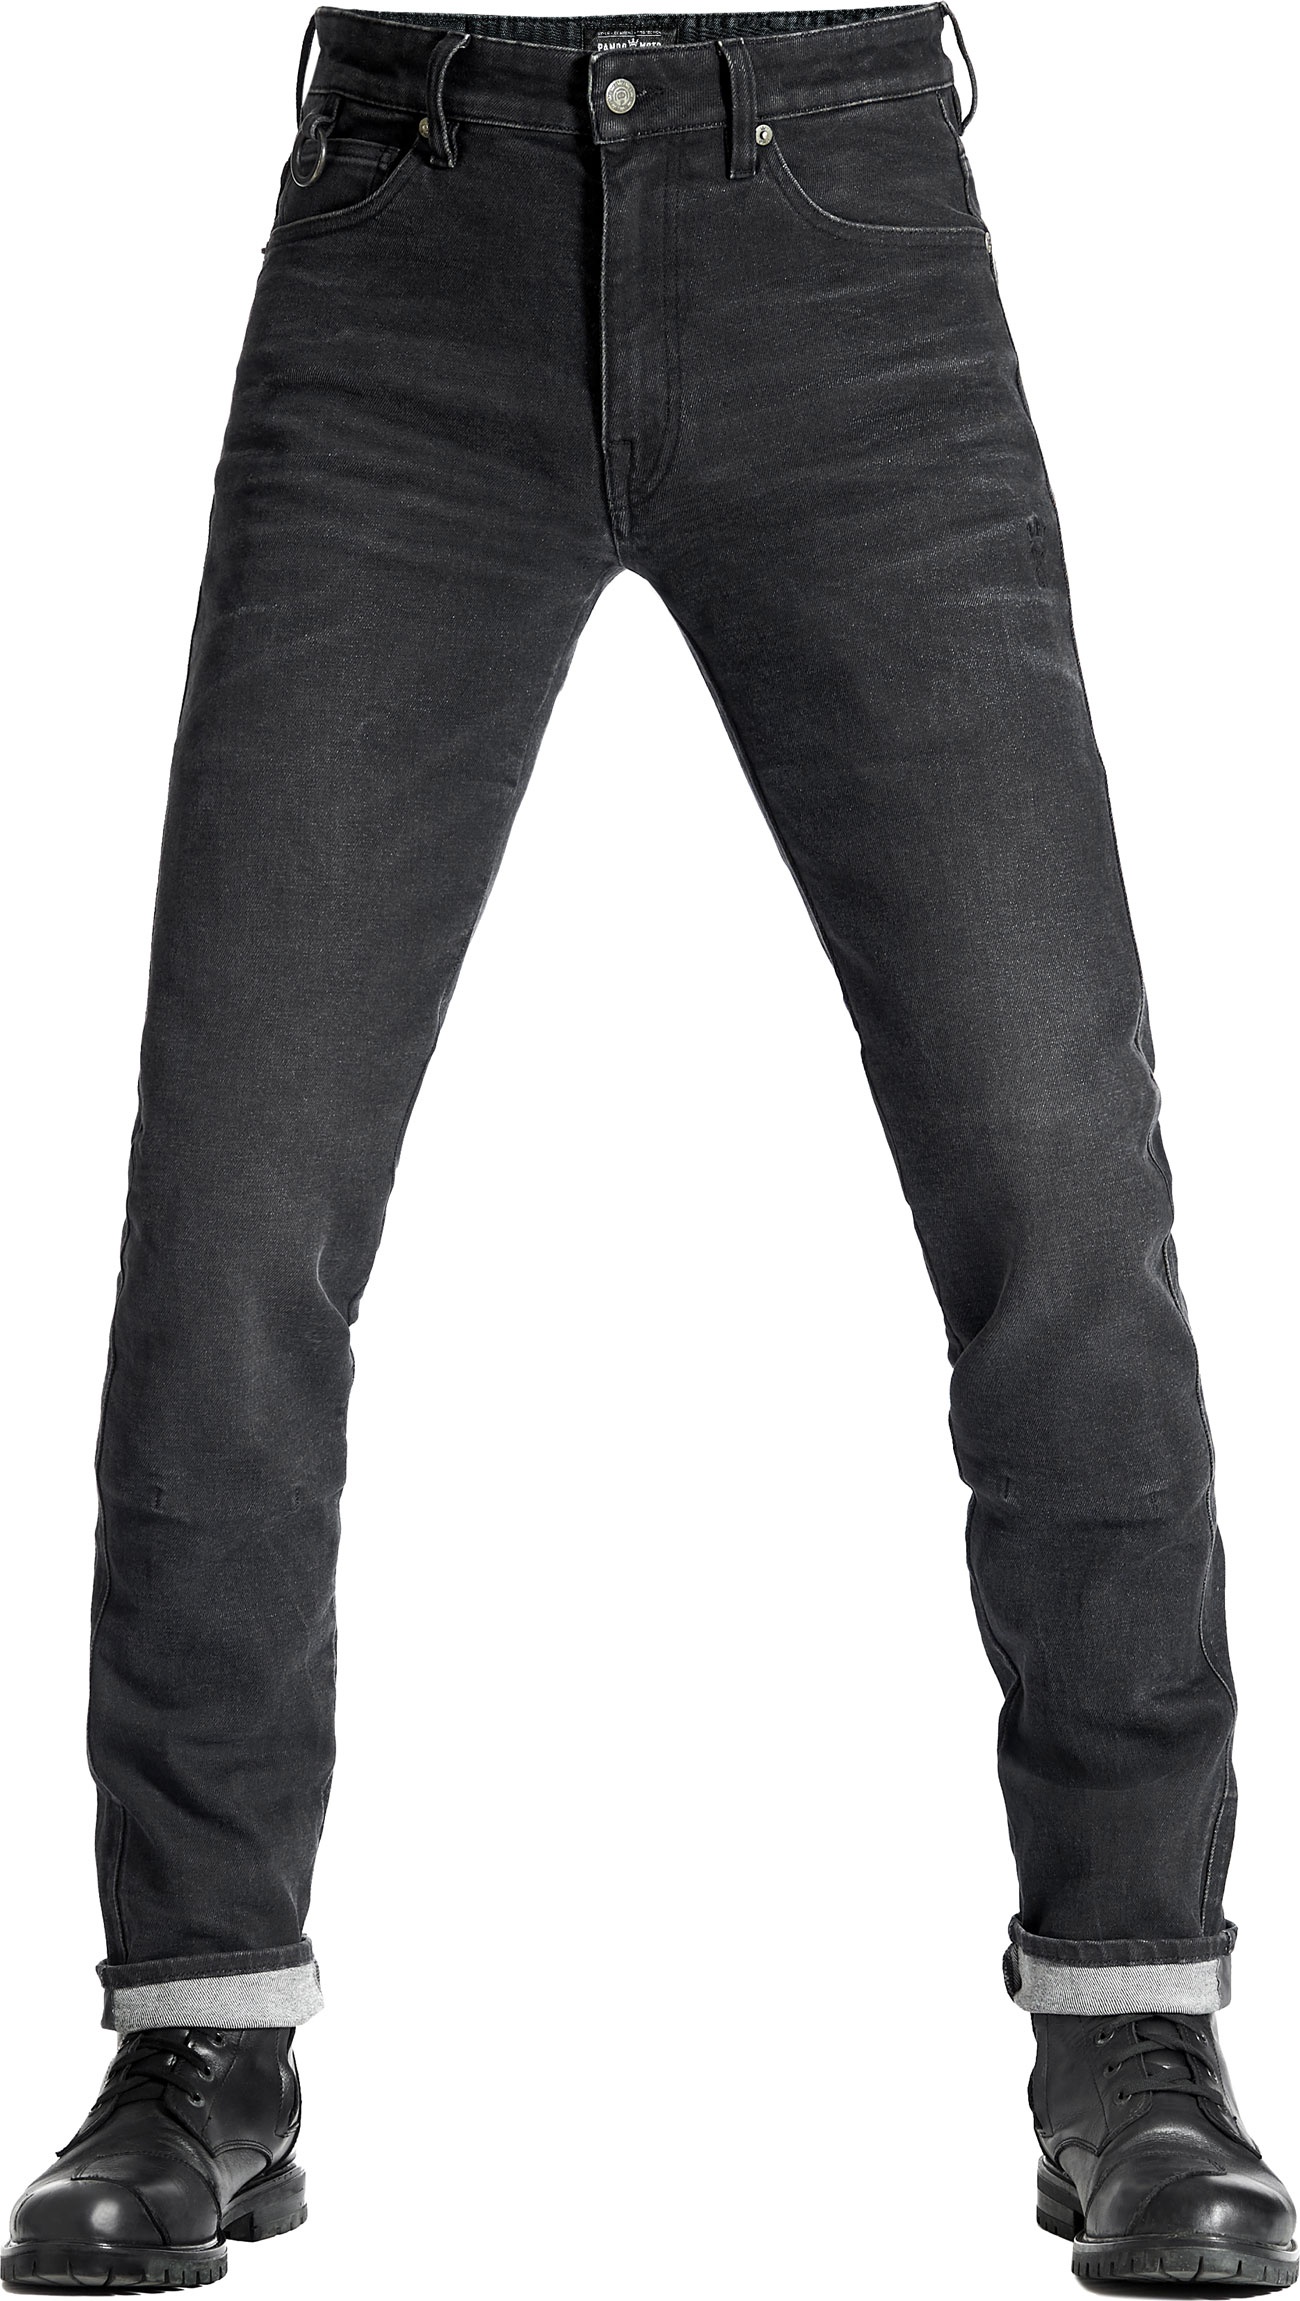 Pando Moto Robby Arm 01, jeans - Noir - W33/L34